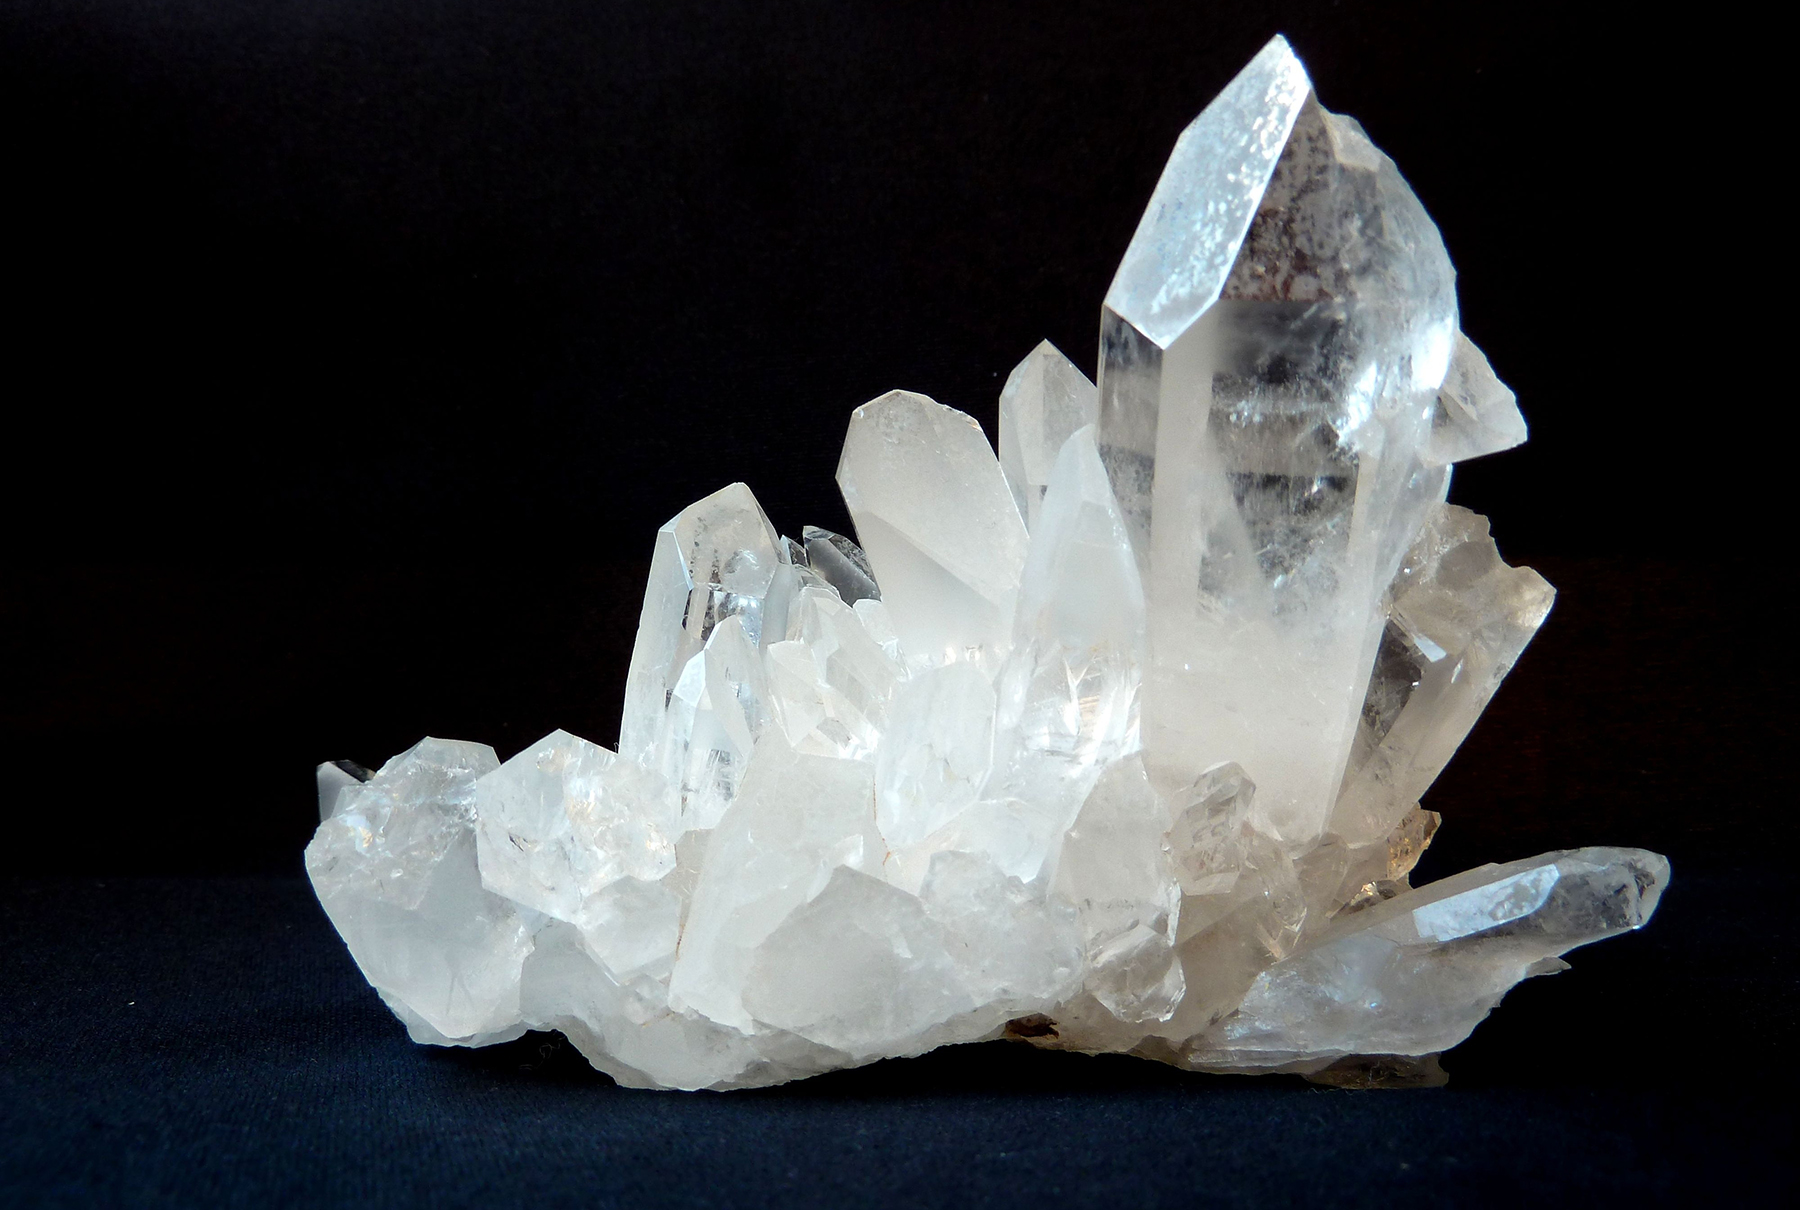 A close-up picture of a quartz crystal